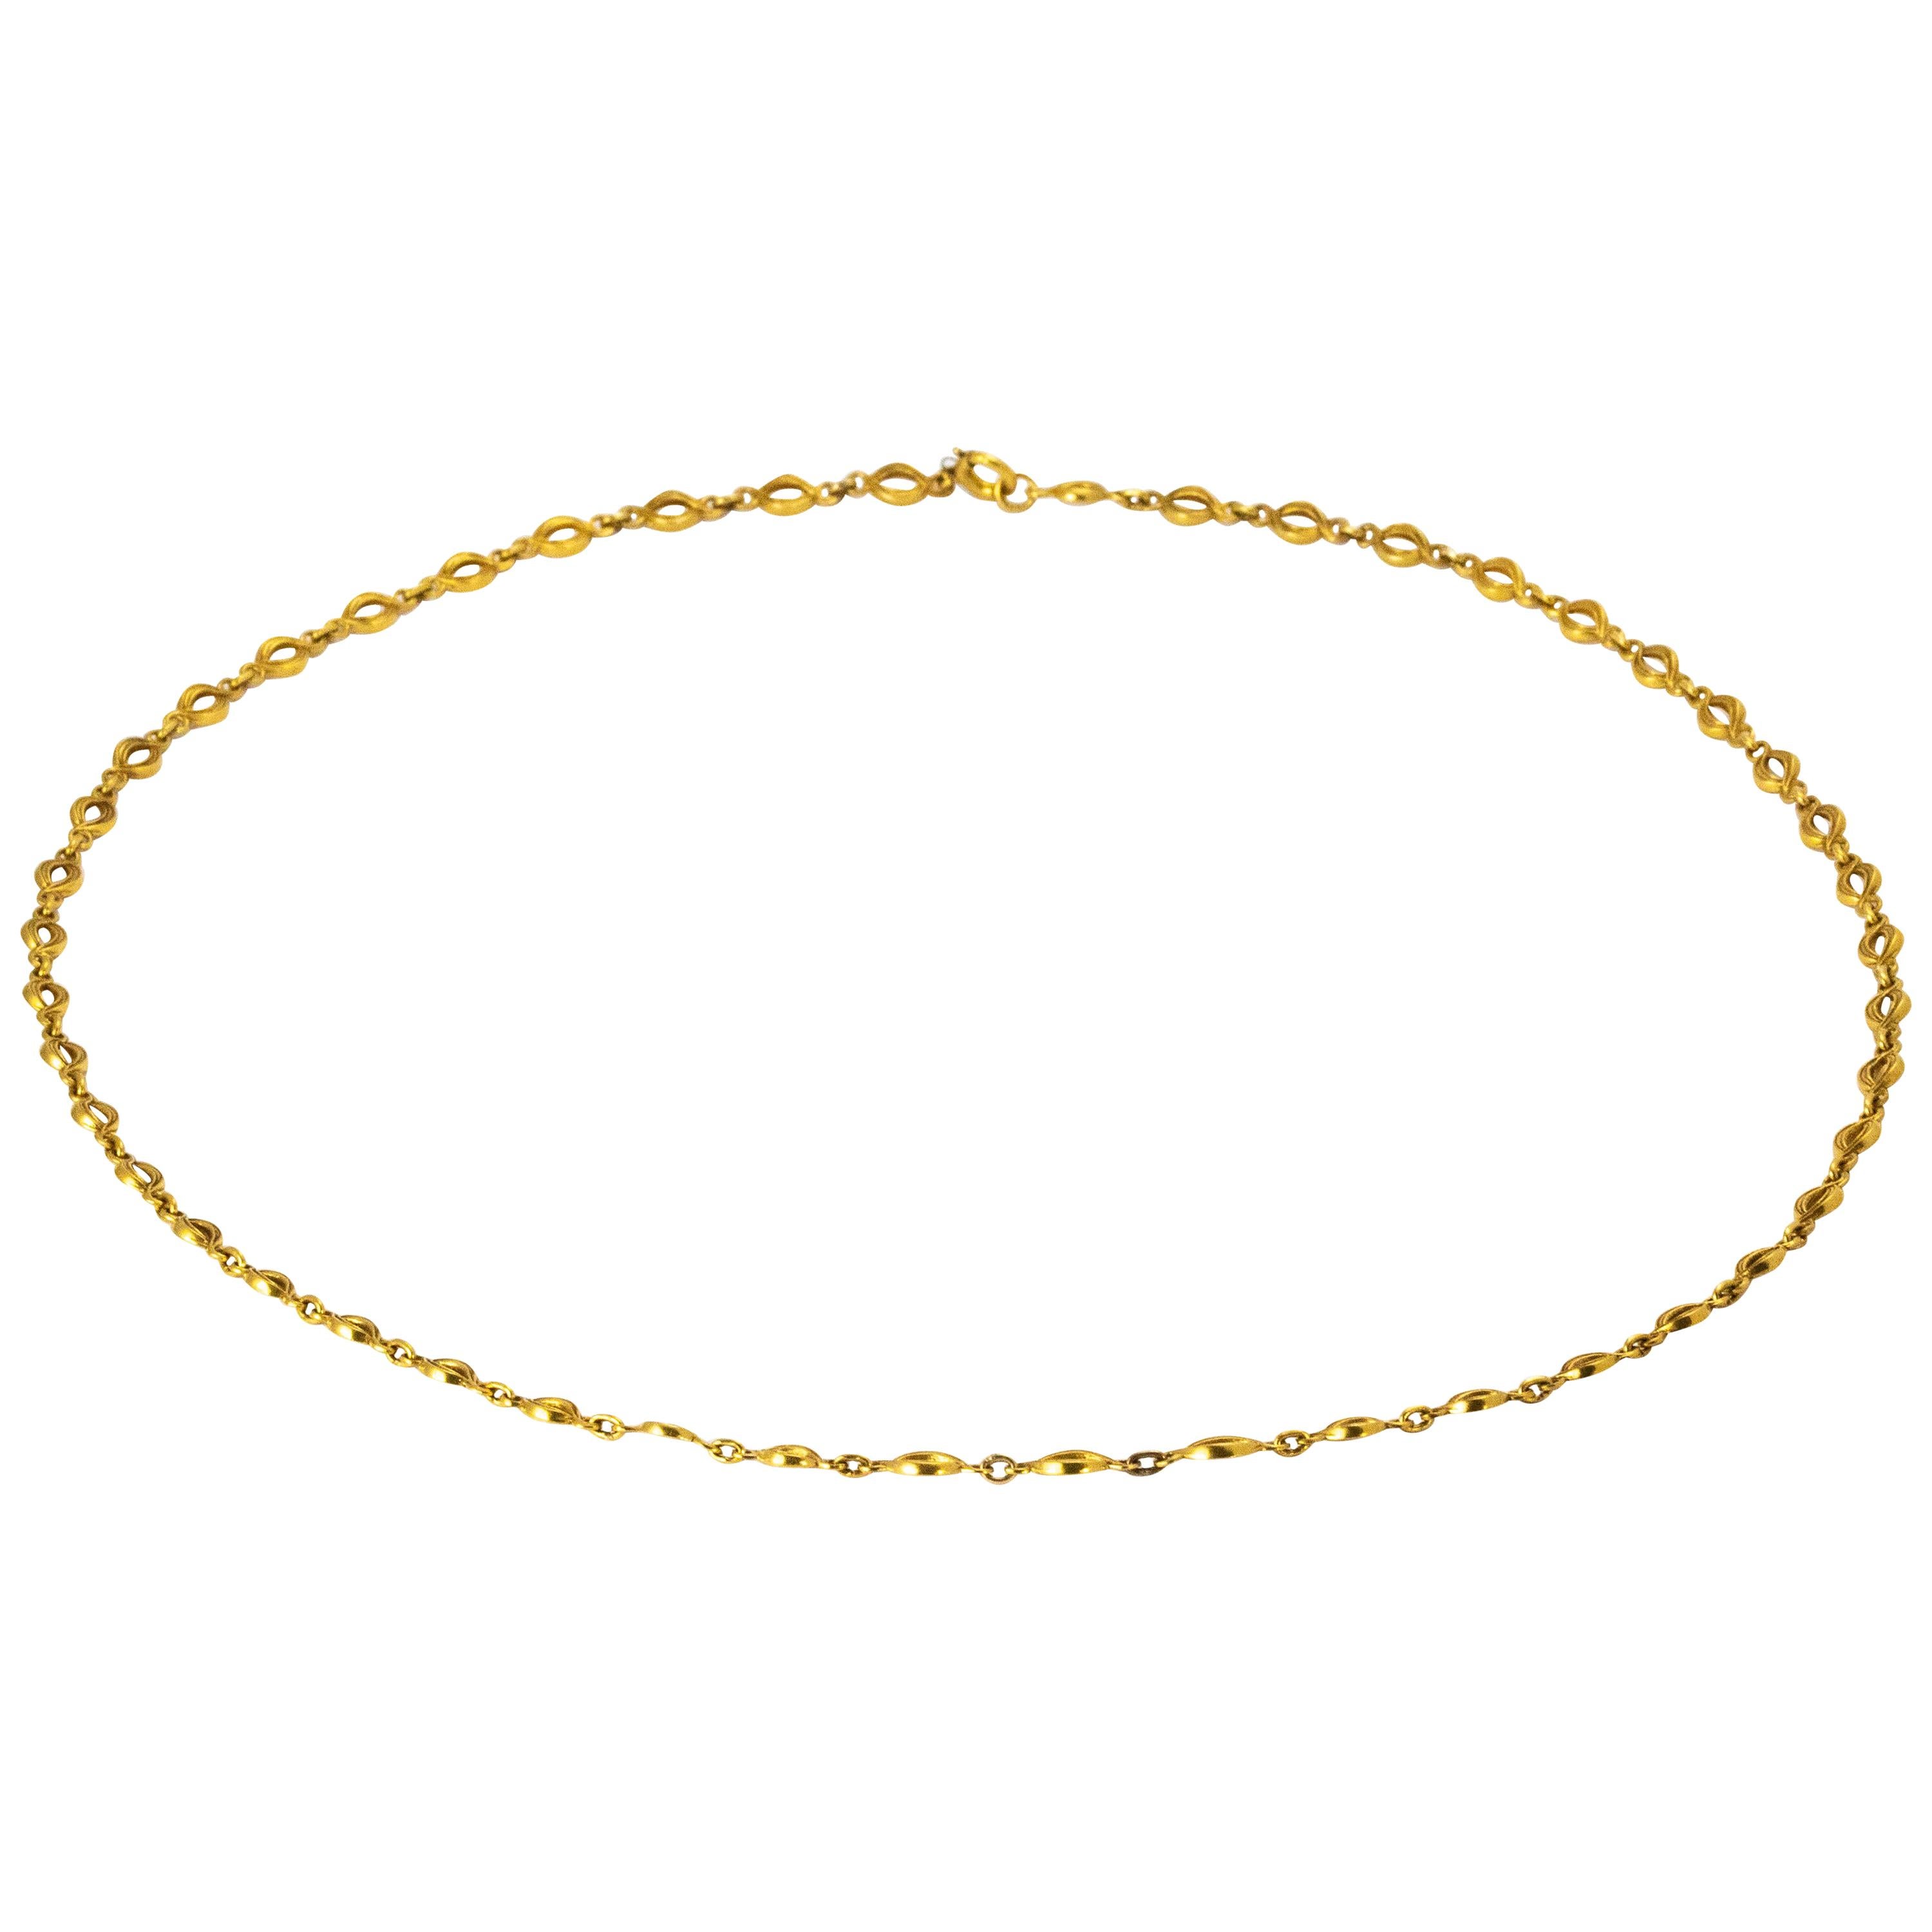 Edwardian 18 Karat Yellow Gold Necklace